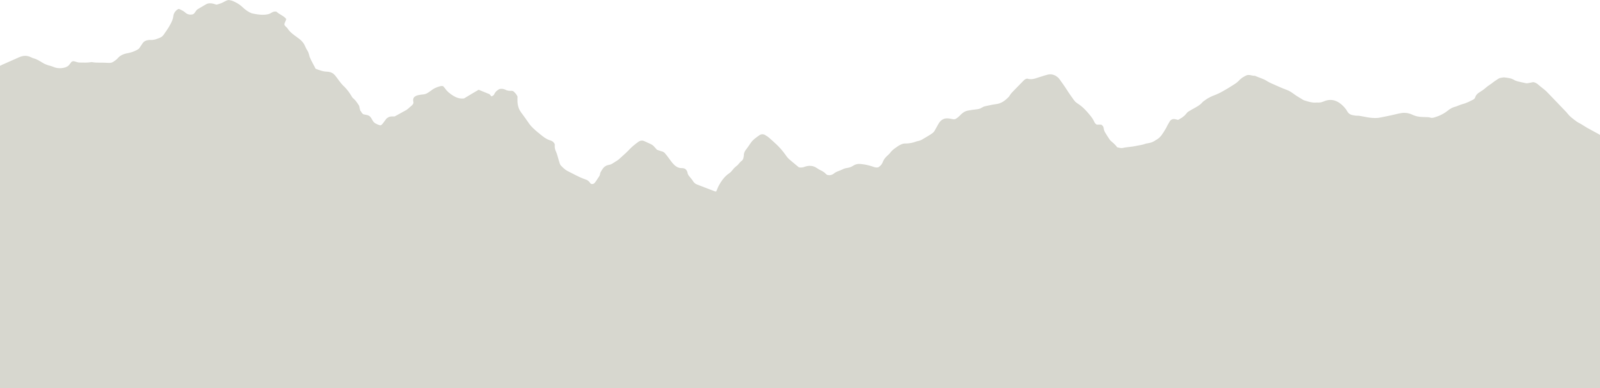 Illustration of mountain silhouettes